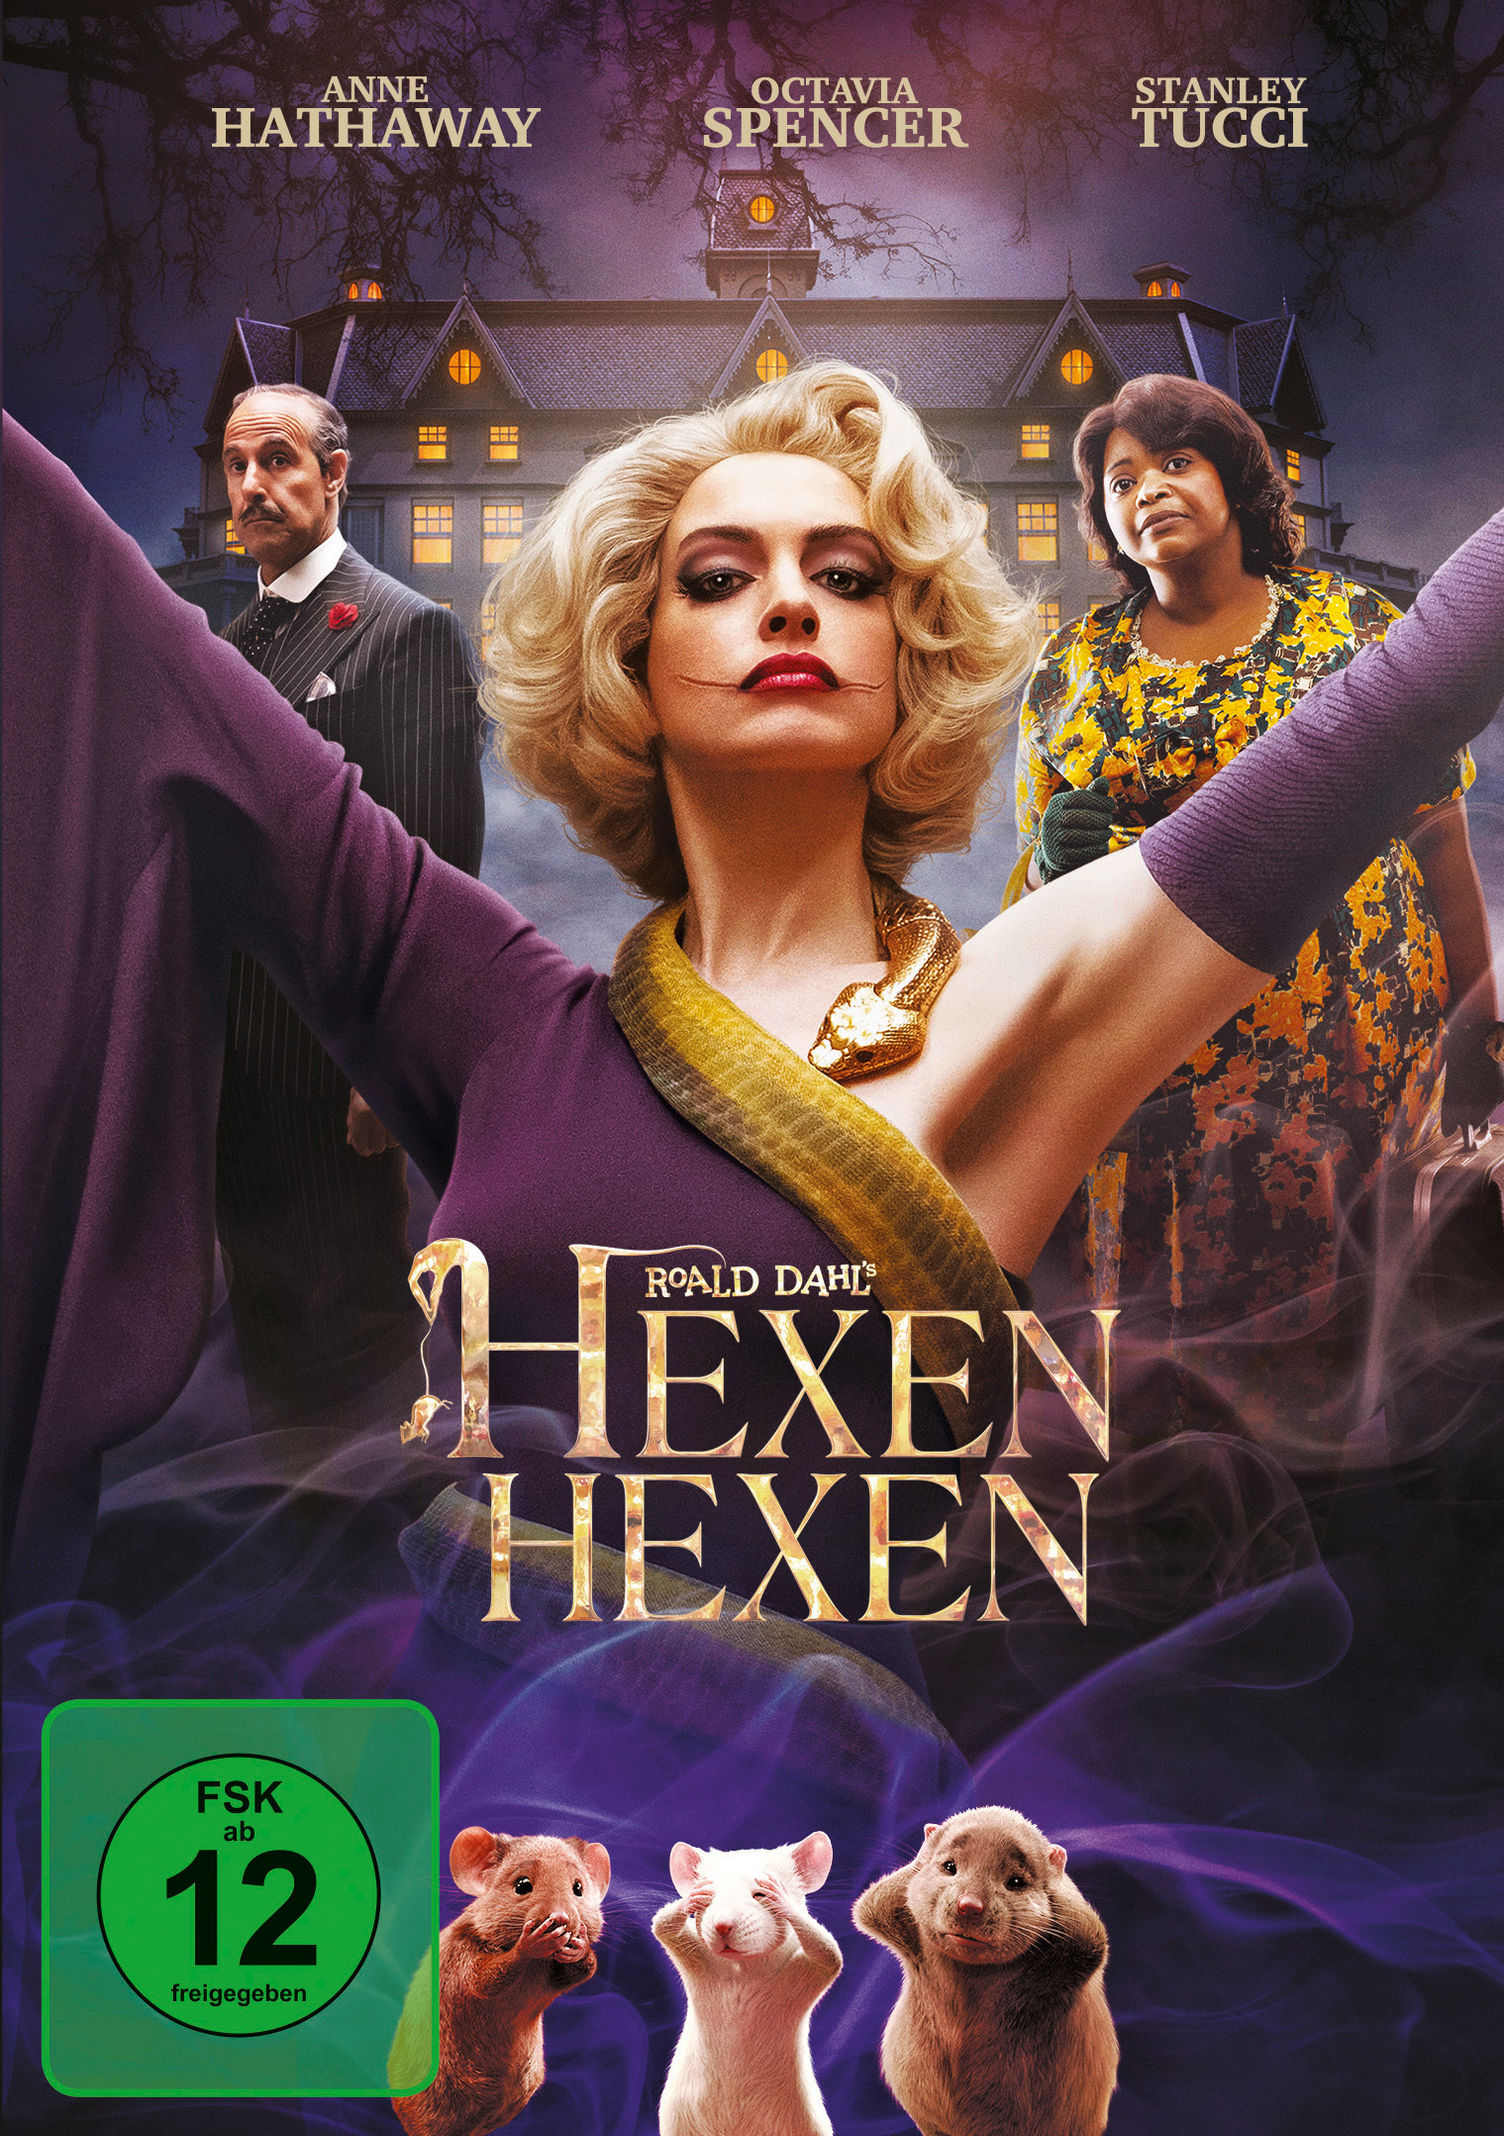 Hexen hexen 2020 DVD jetzt bei Weltbild.de online bestellen